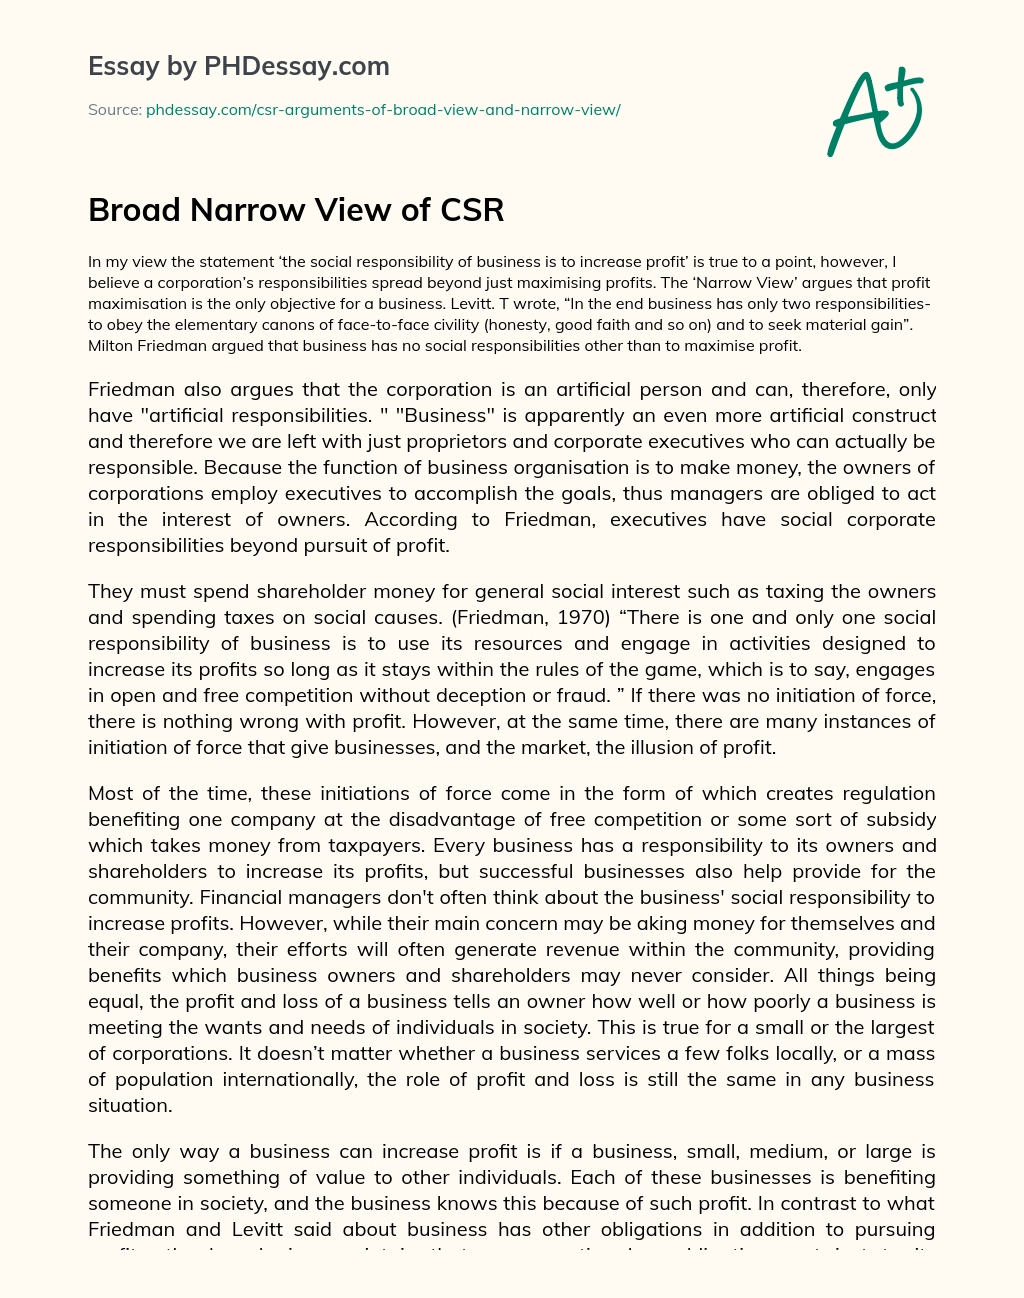 Broad Narrow View of CSR essay